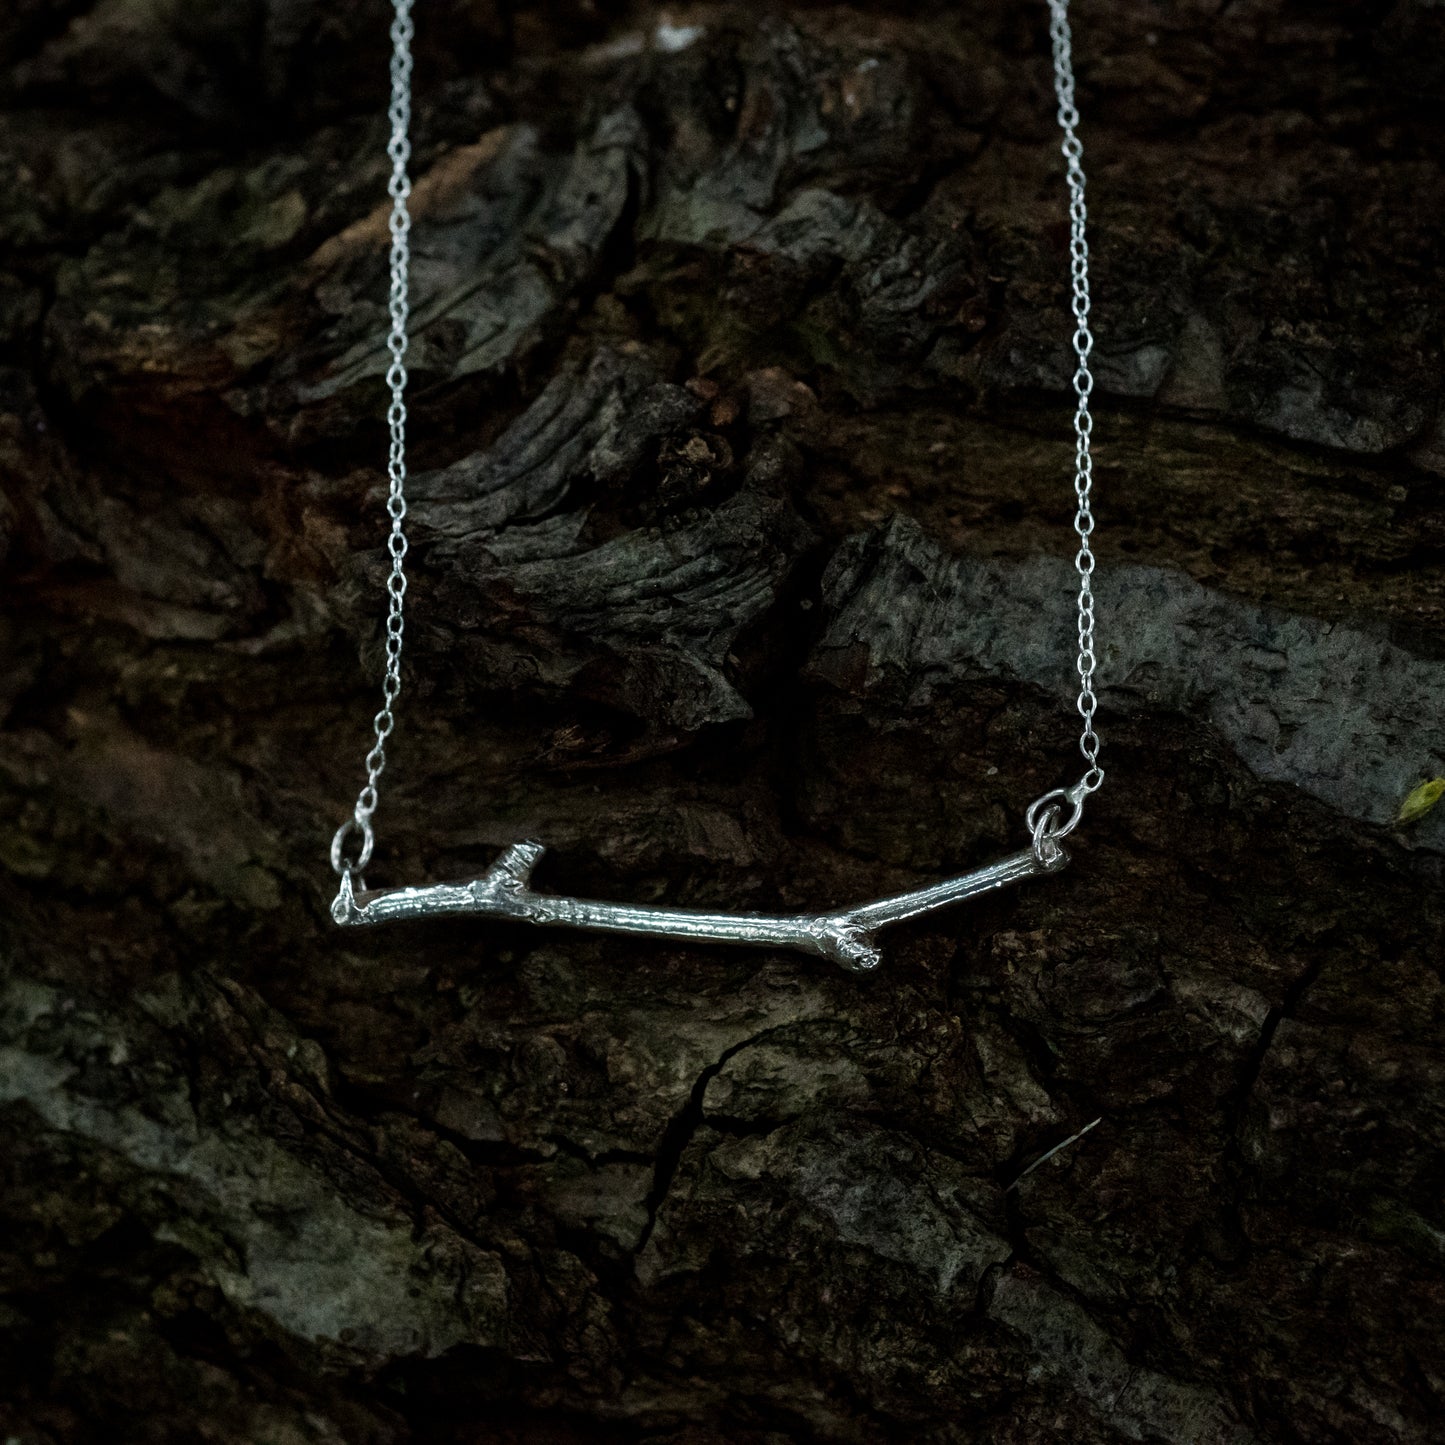 A silver woodland necklace on a dark, bark backgound